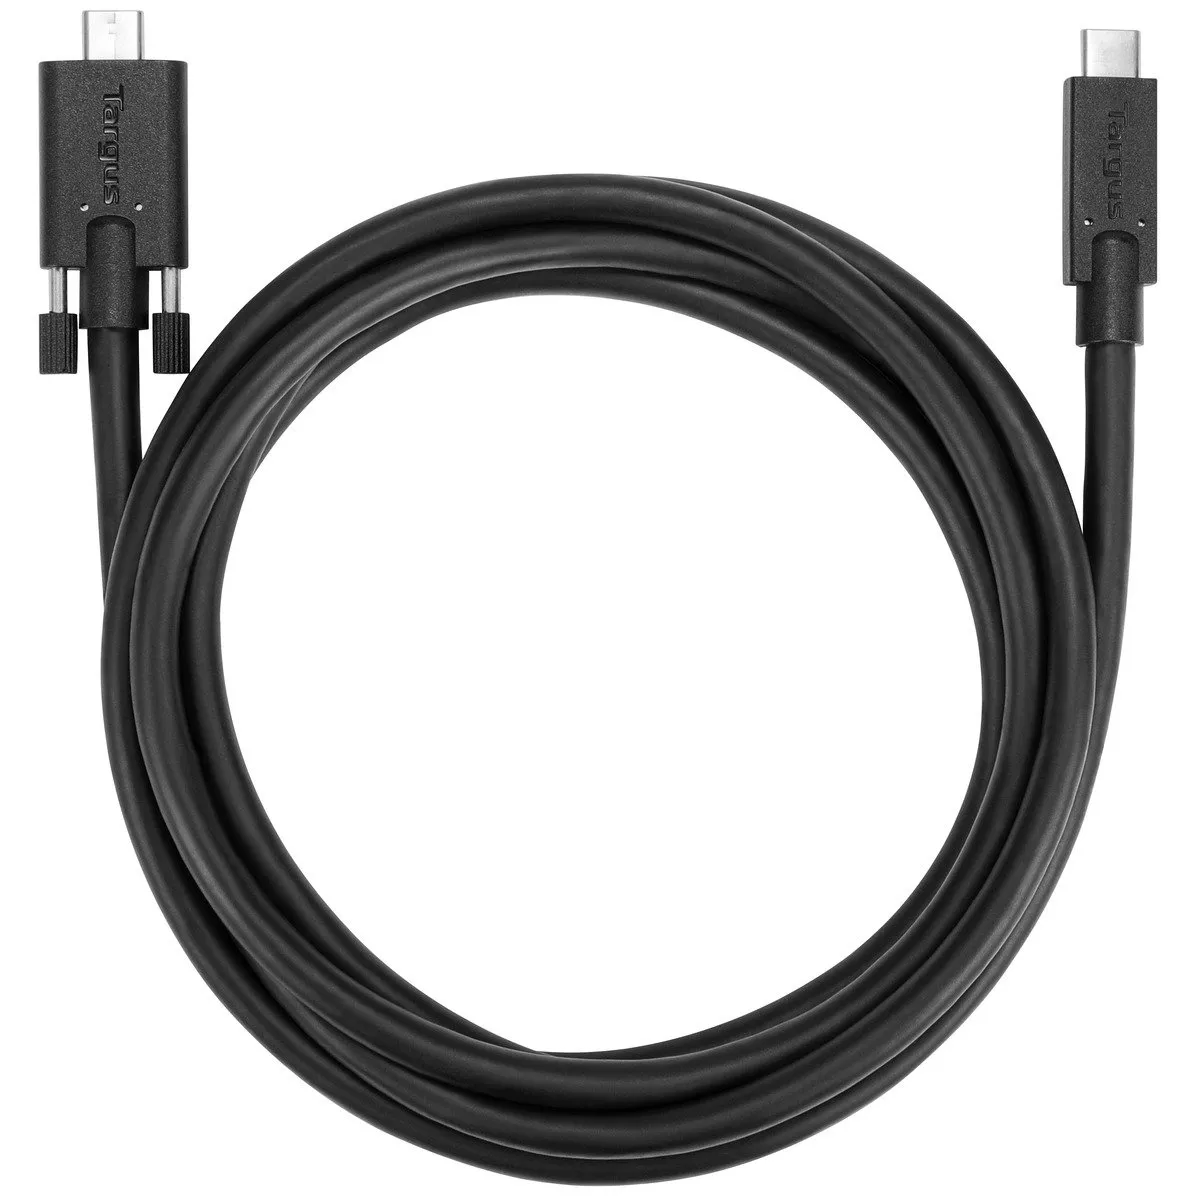 Revendeur officiel TARGUS 1.8m USB-C to USB-C Dock Cable with Screw